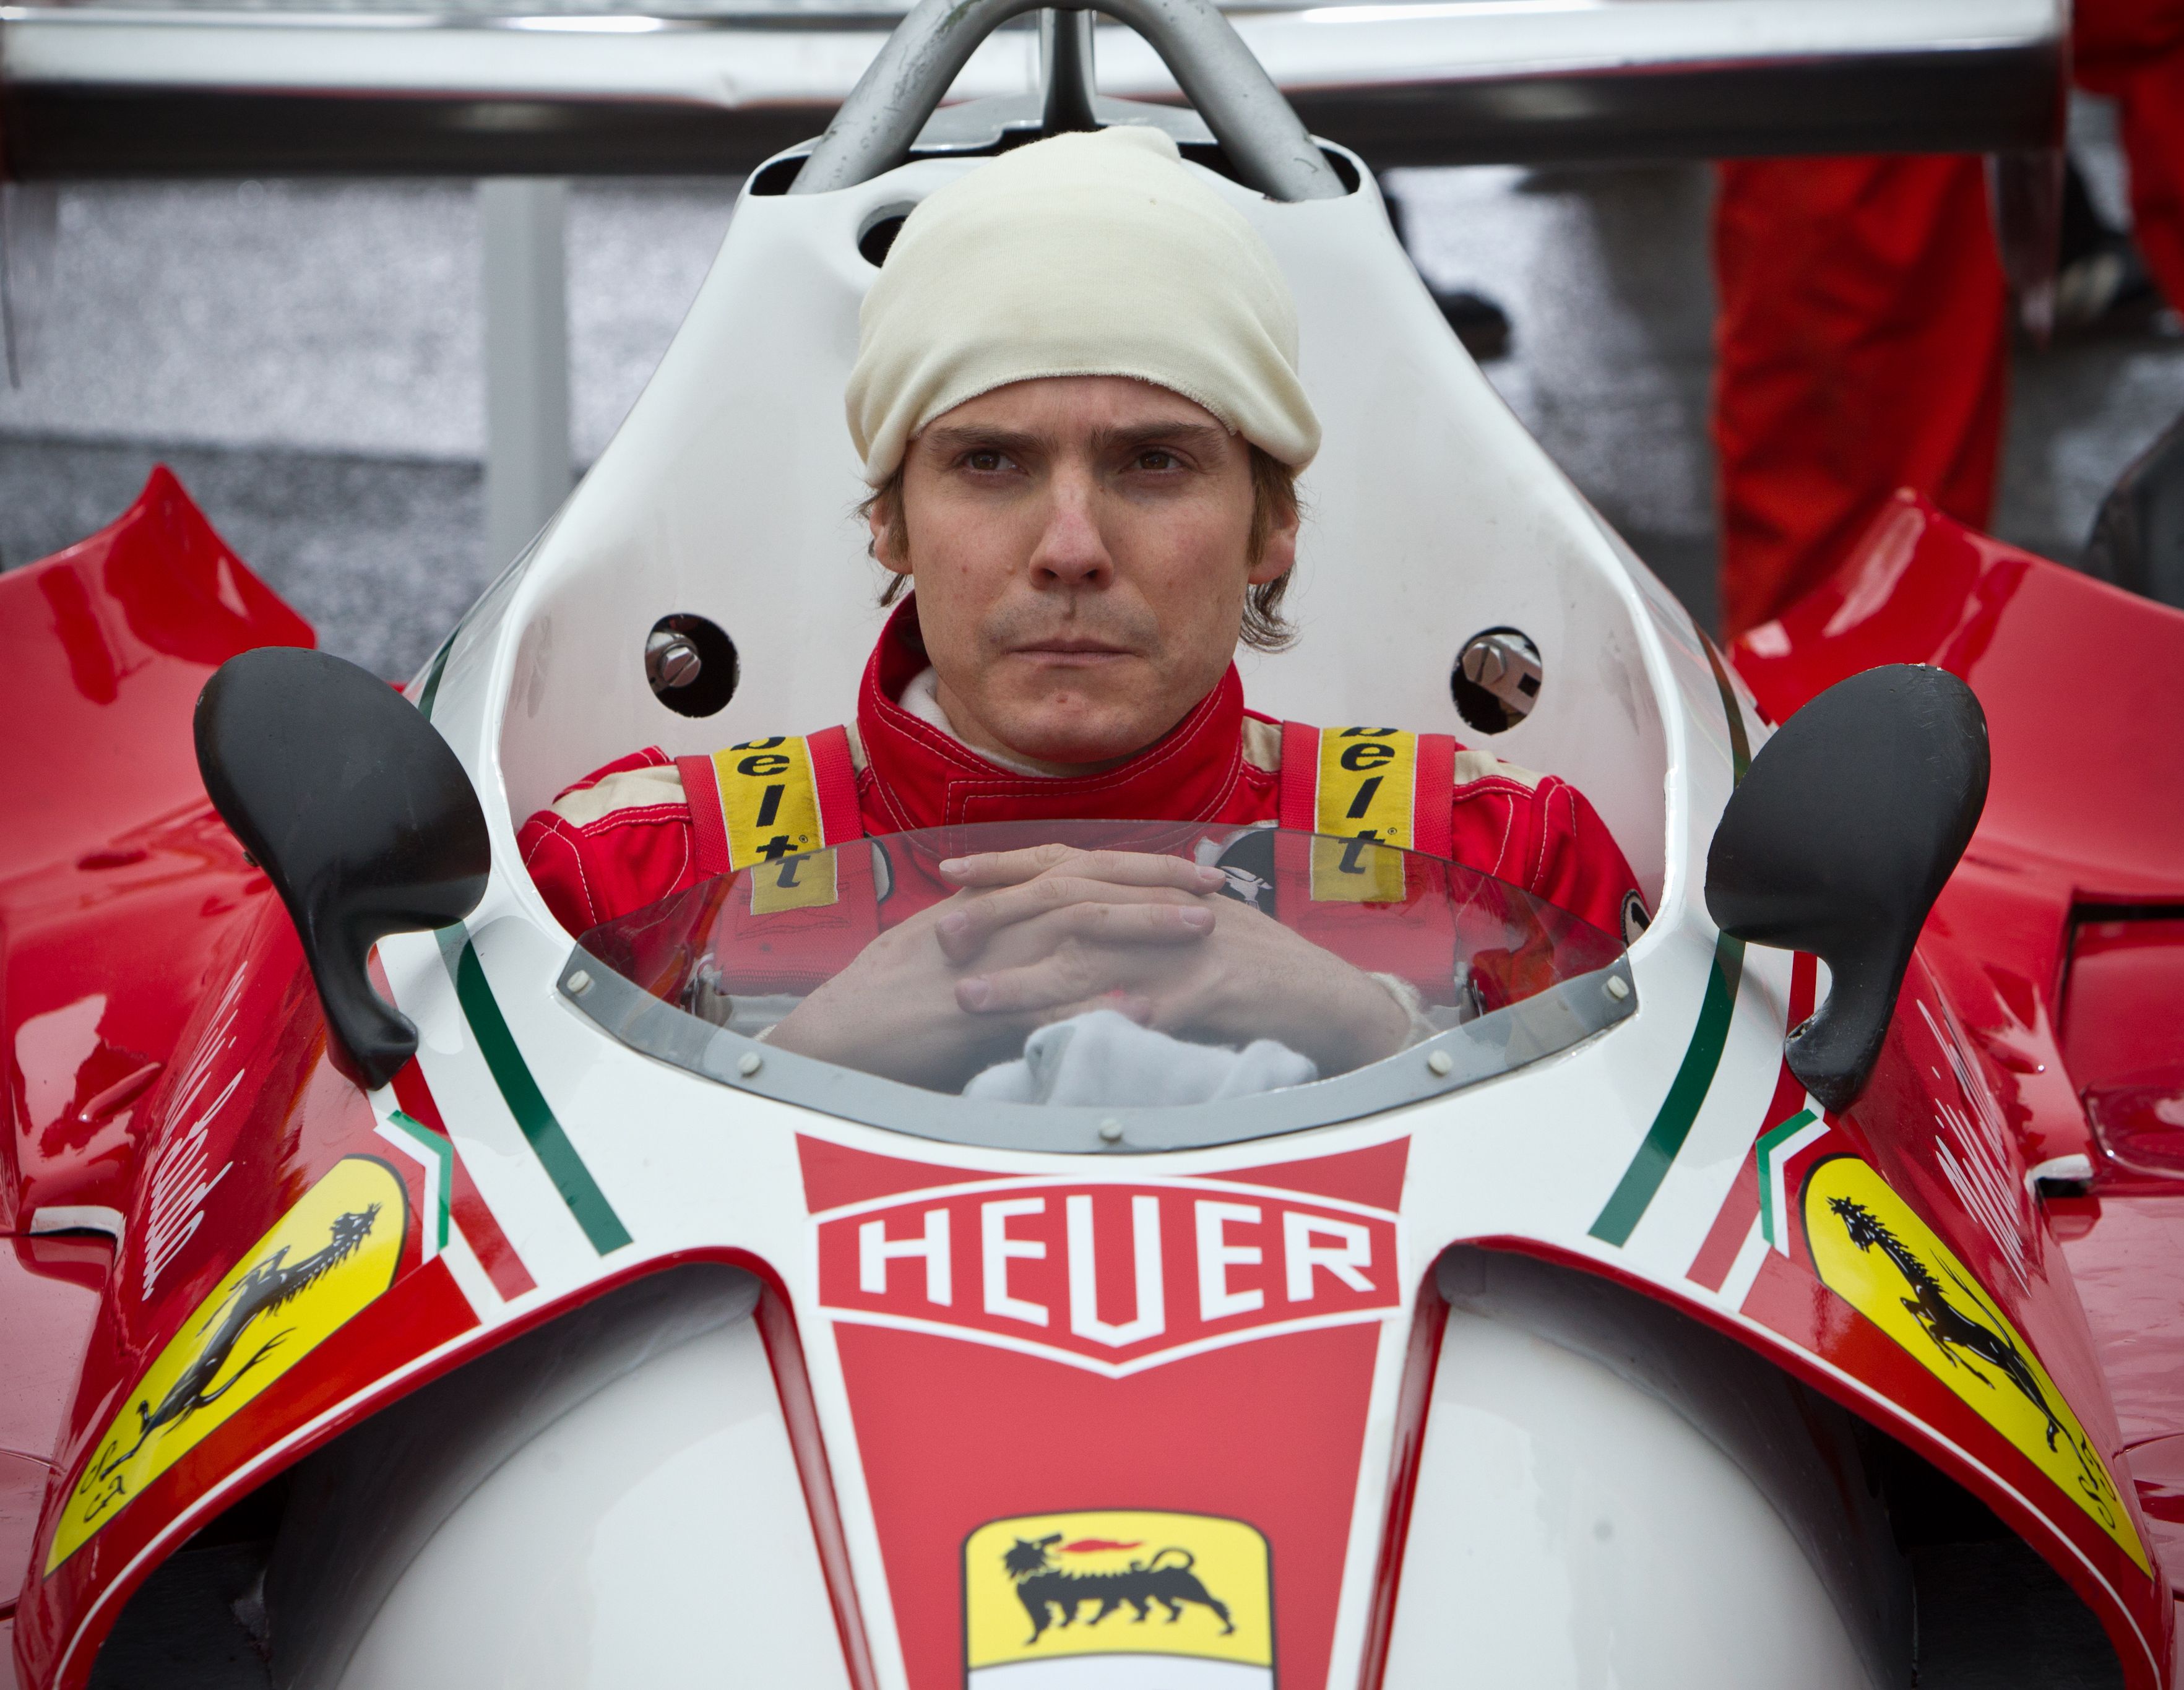 Daniel Brühl in the Ferrari cockpit